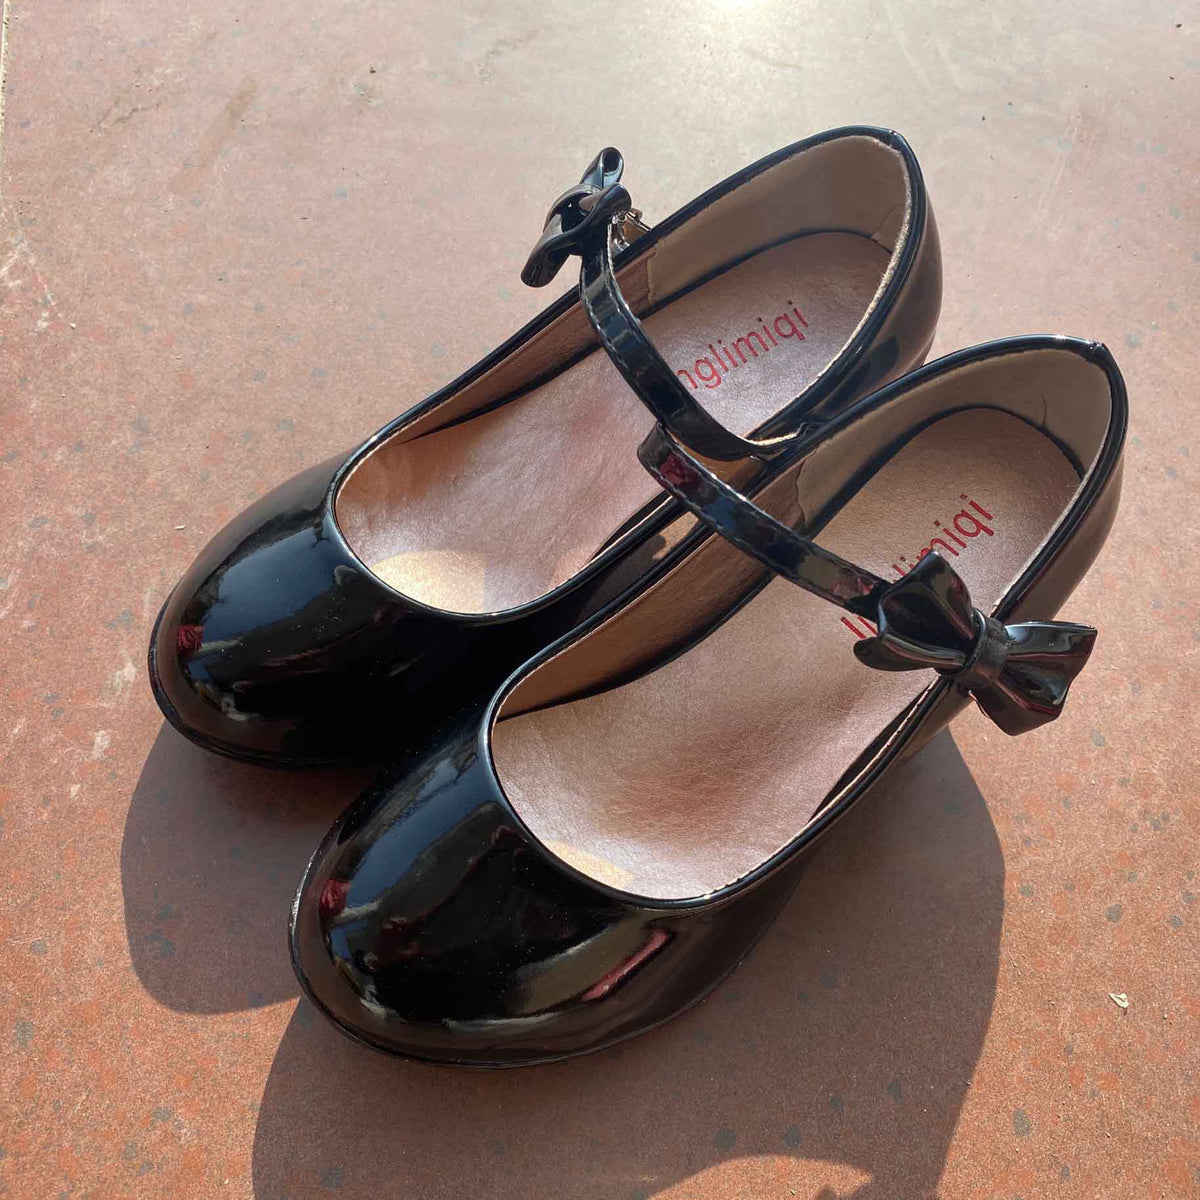 Bekamille Girls Leather Shoes Autumn Bowtie Sandals New Children Shoes High Heels Princess Sweet Sandals For Girls SZ107